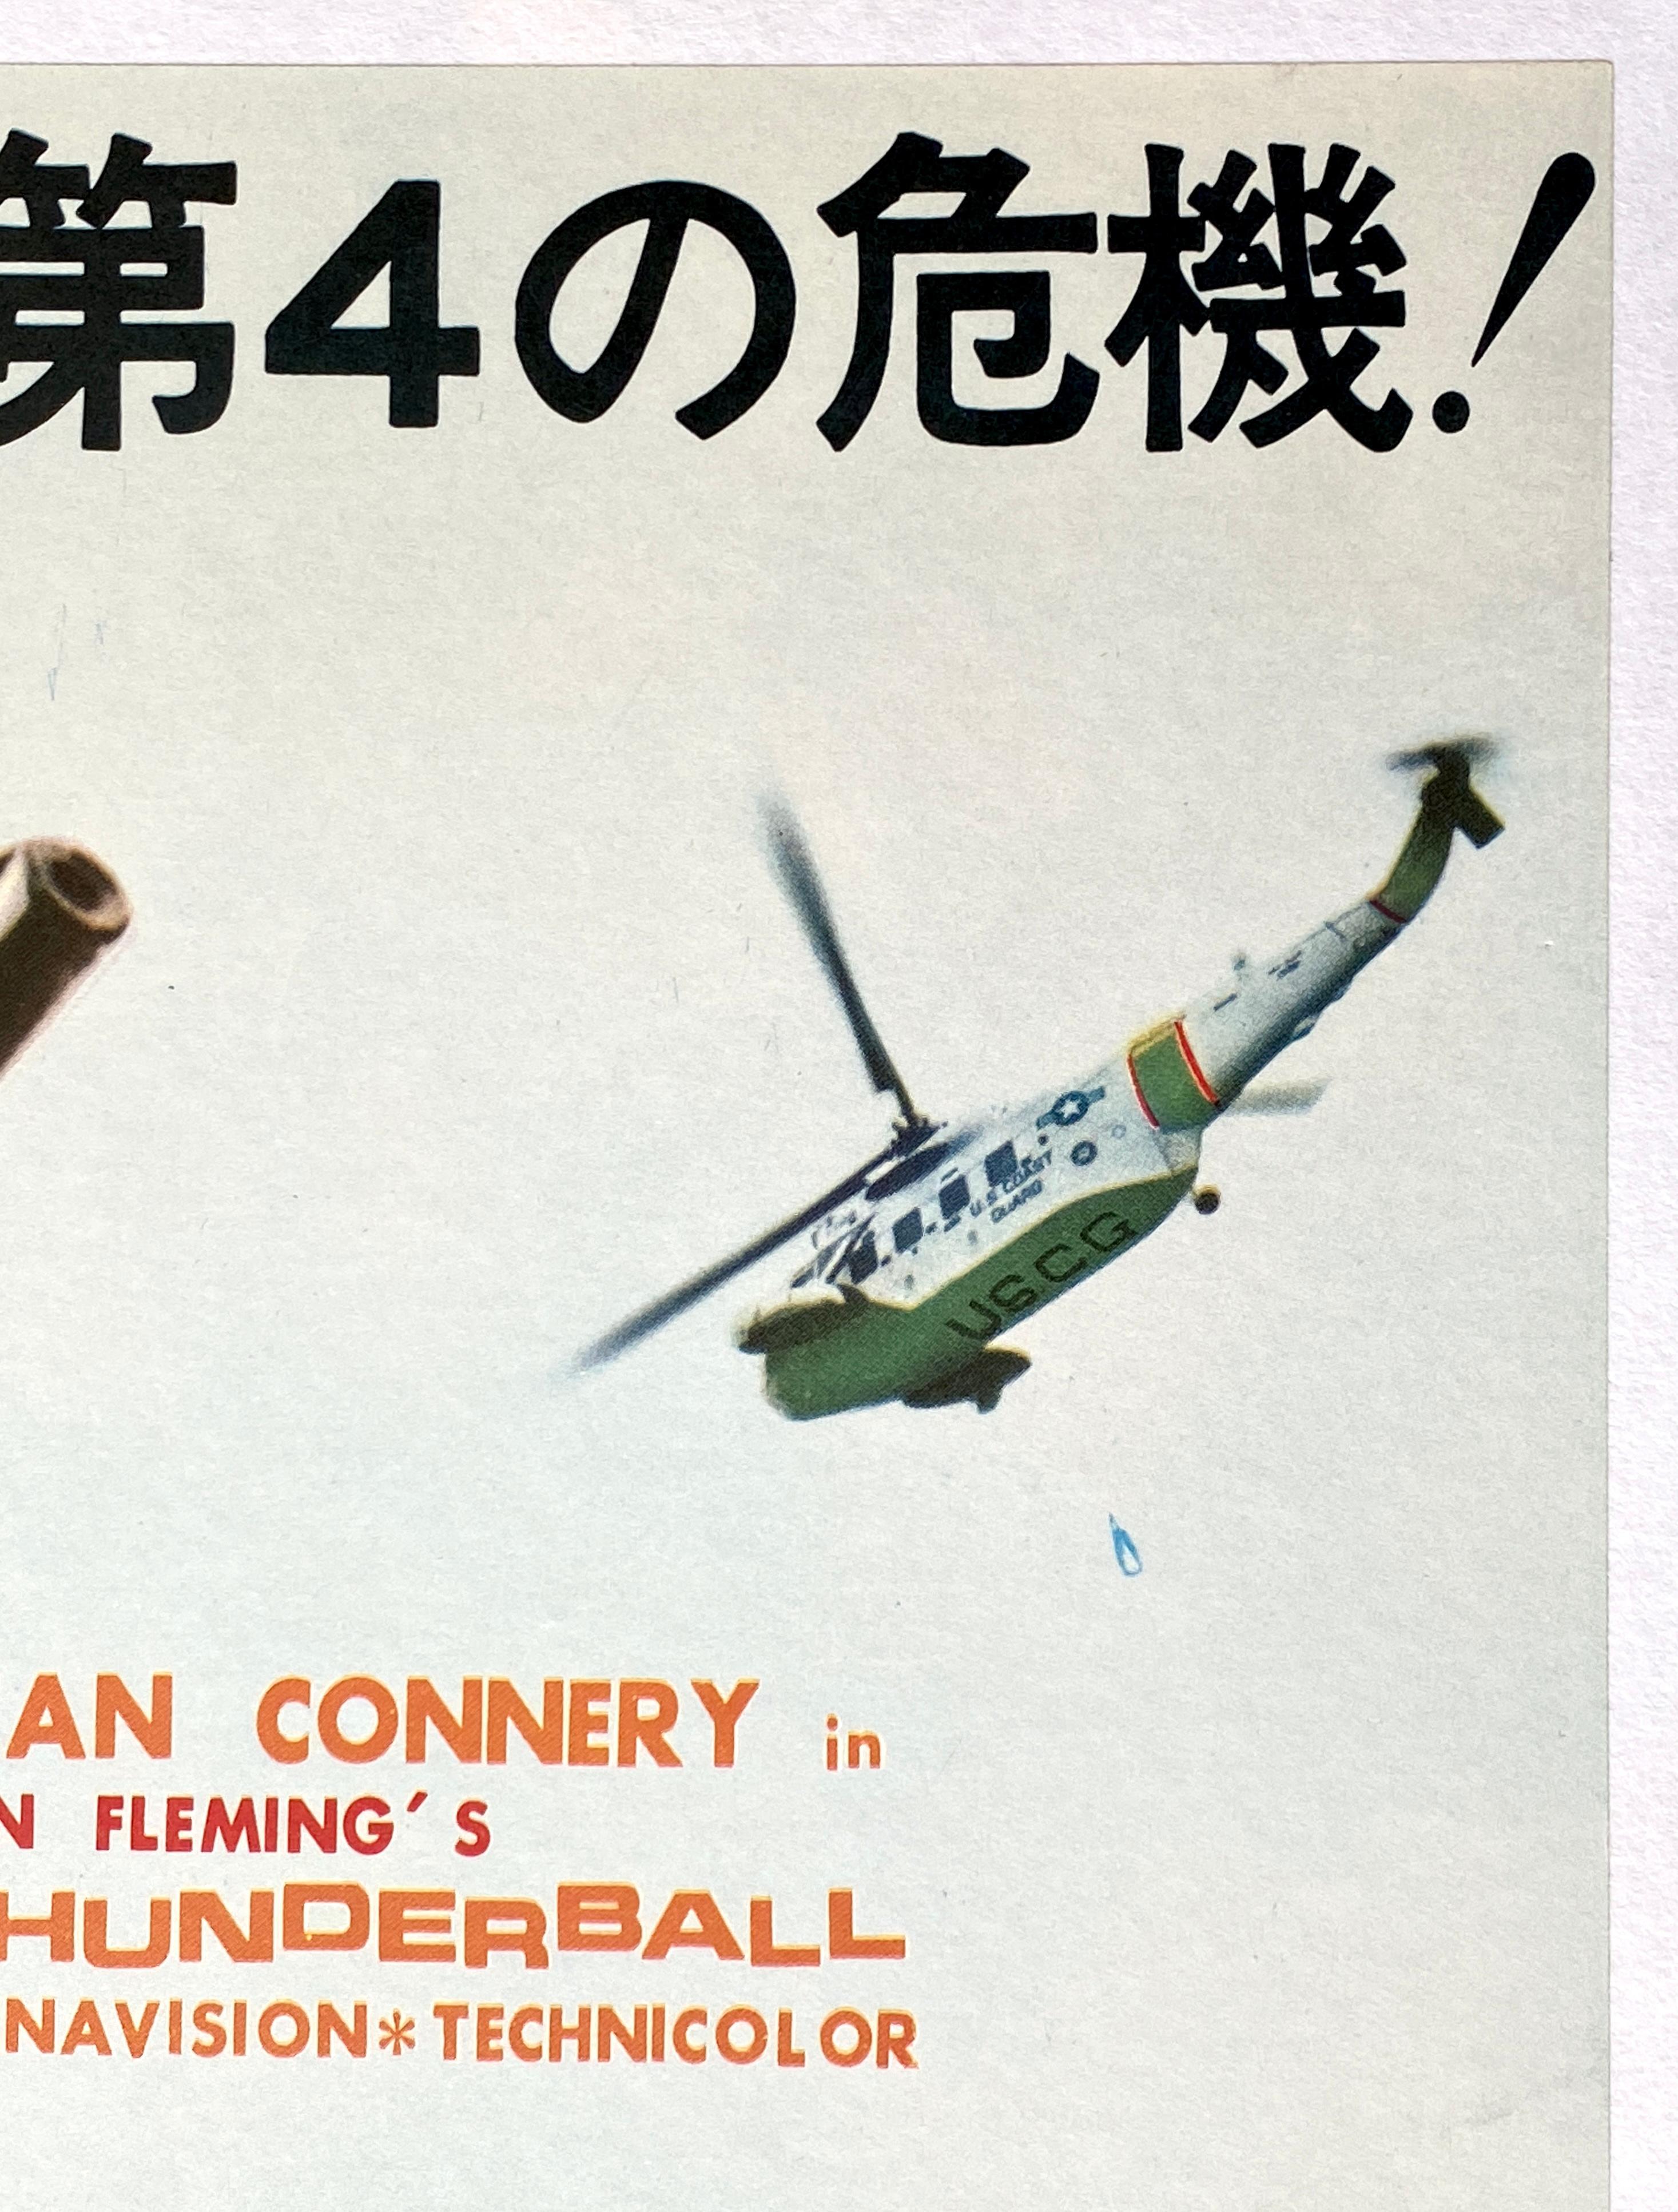 James Bond 'Thunderball' Original Vintage Movie Poster, Japanese, 1965 For Sale 5